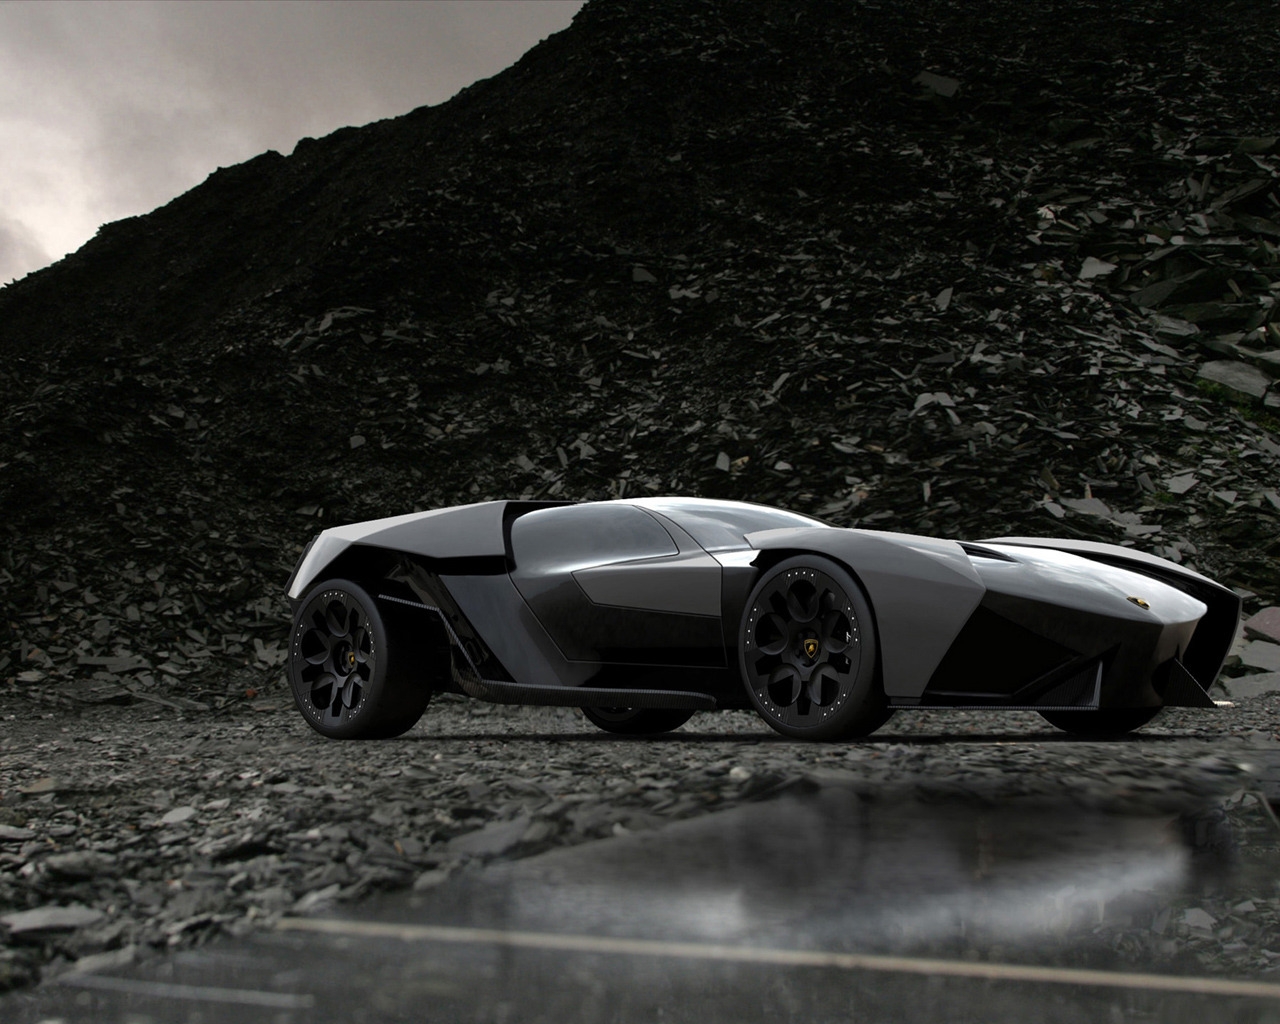 Lamborghini Ankonian for 1280 x 1024 resolution